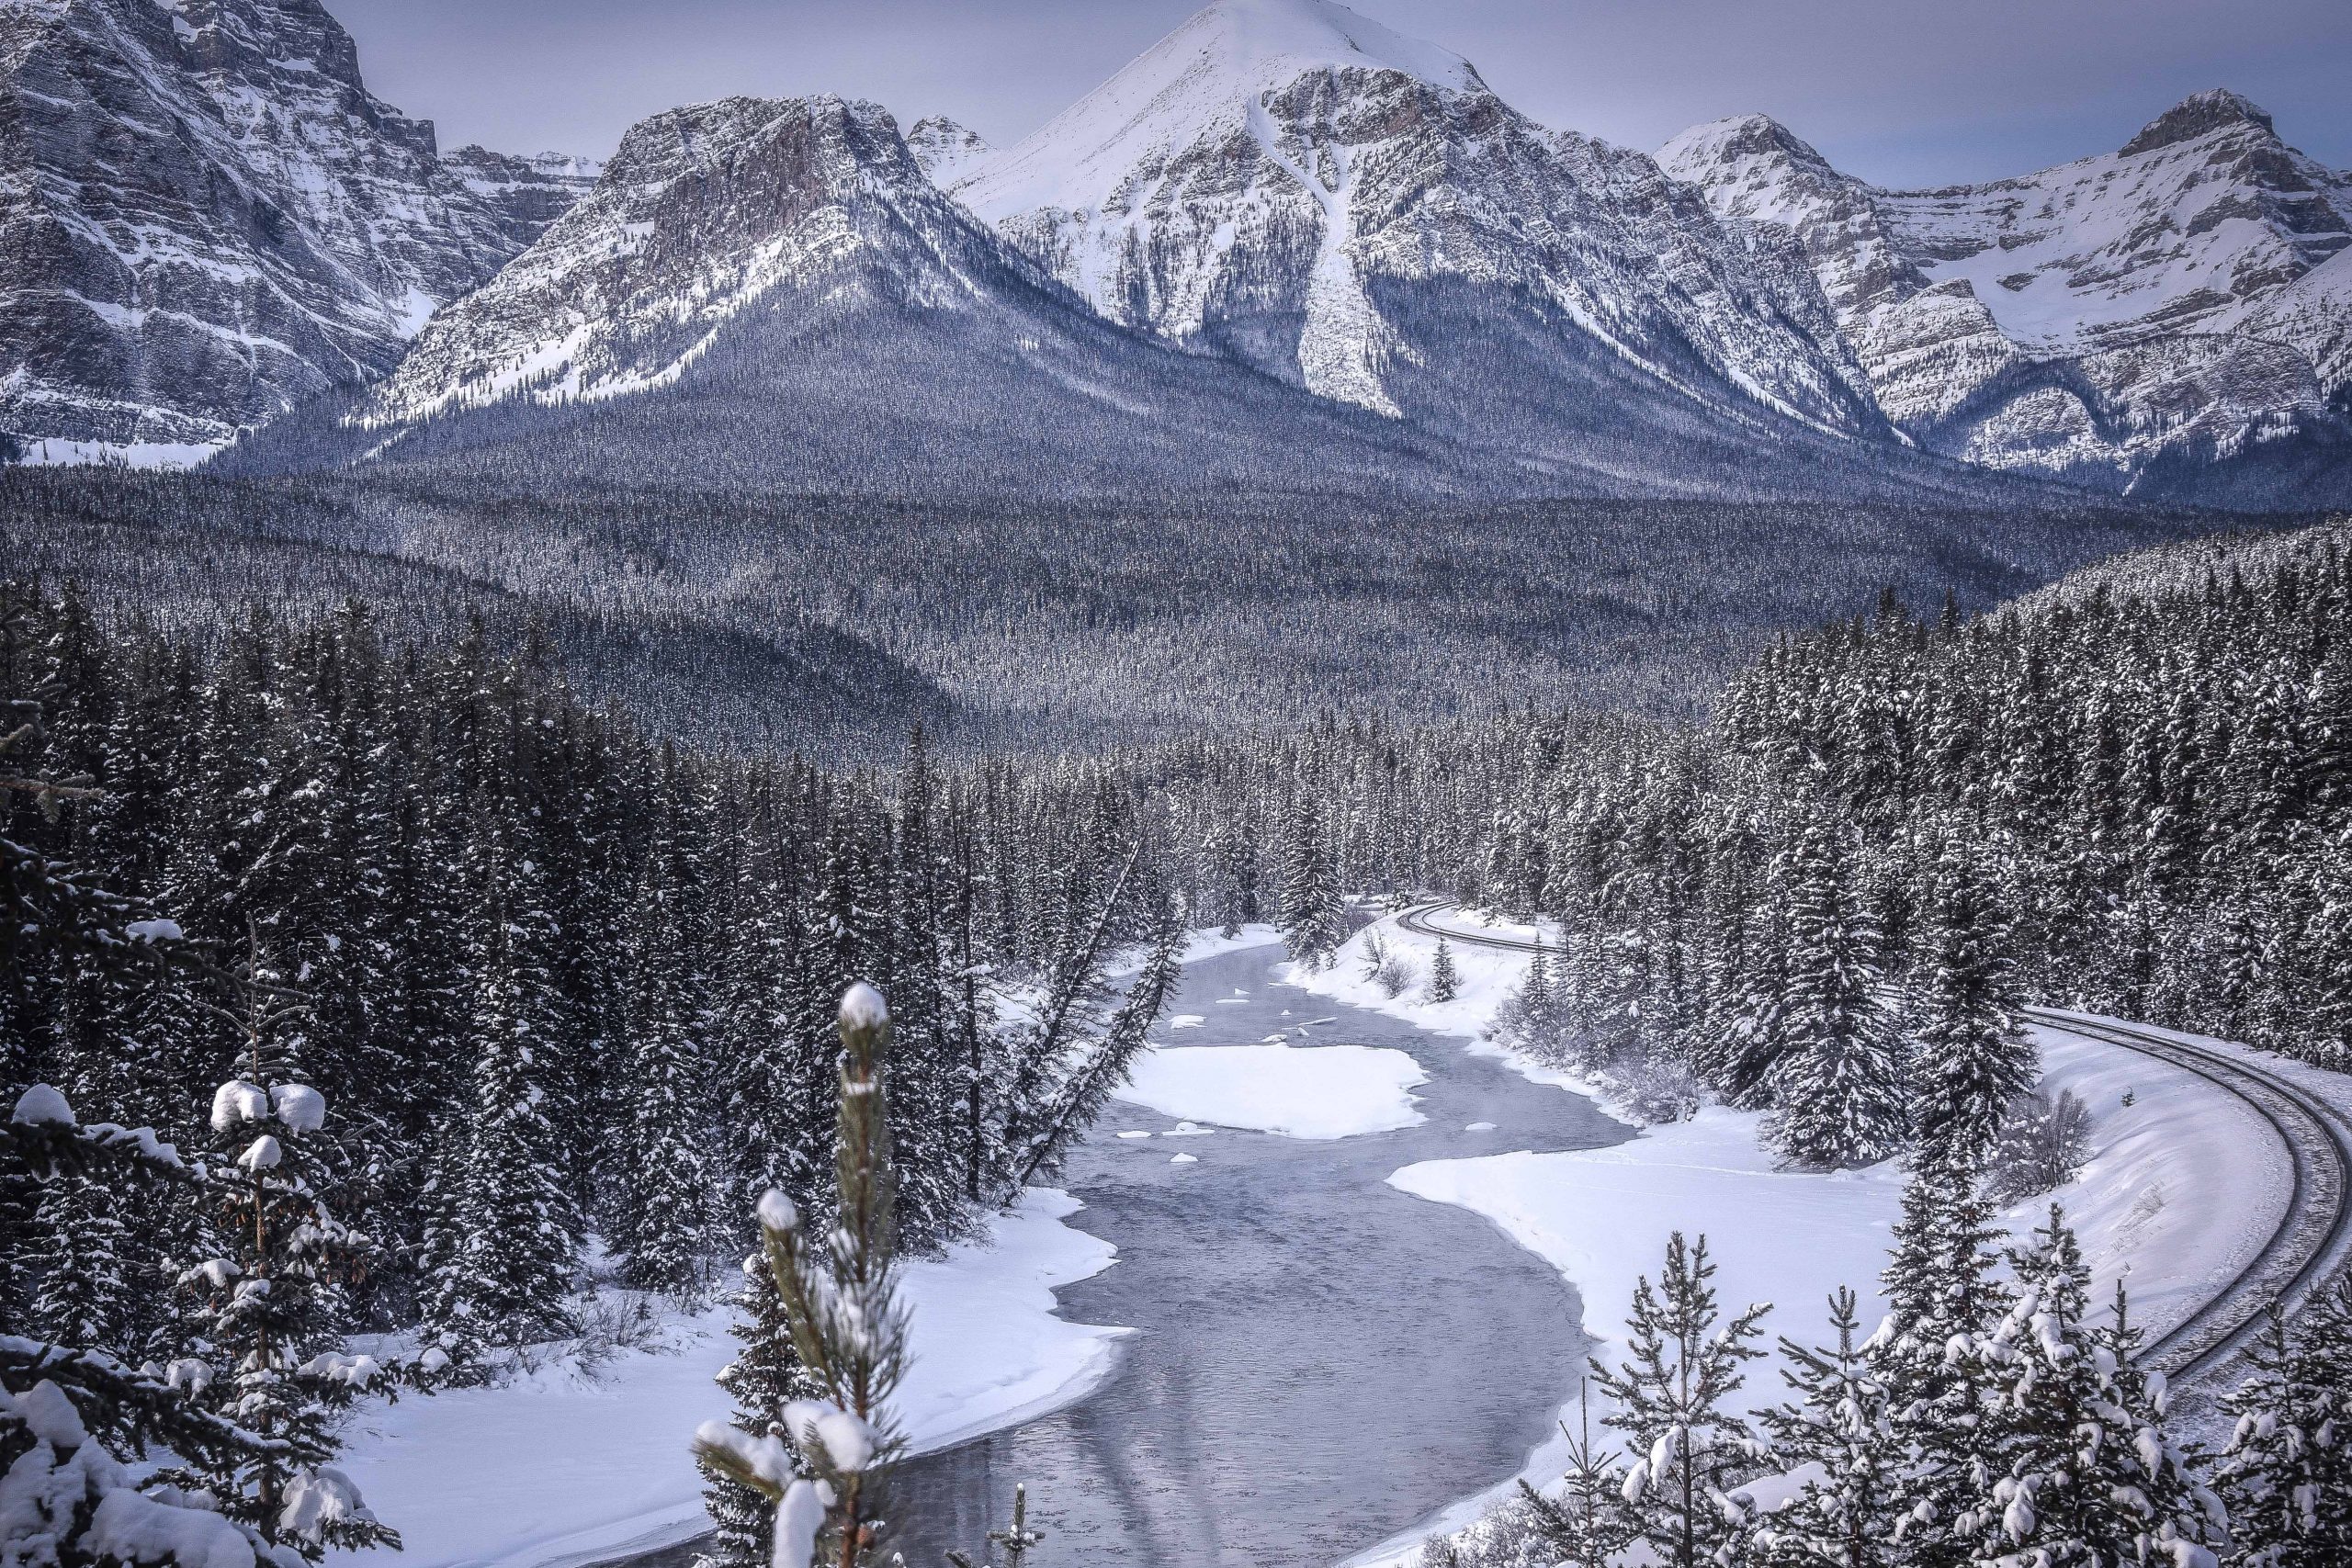 Member Advisory: Three Presumed Dead in Banff National Park Avalanche